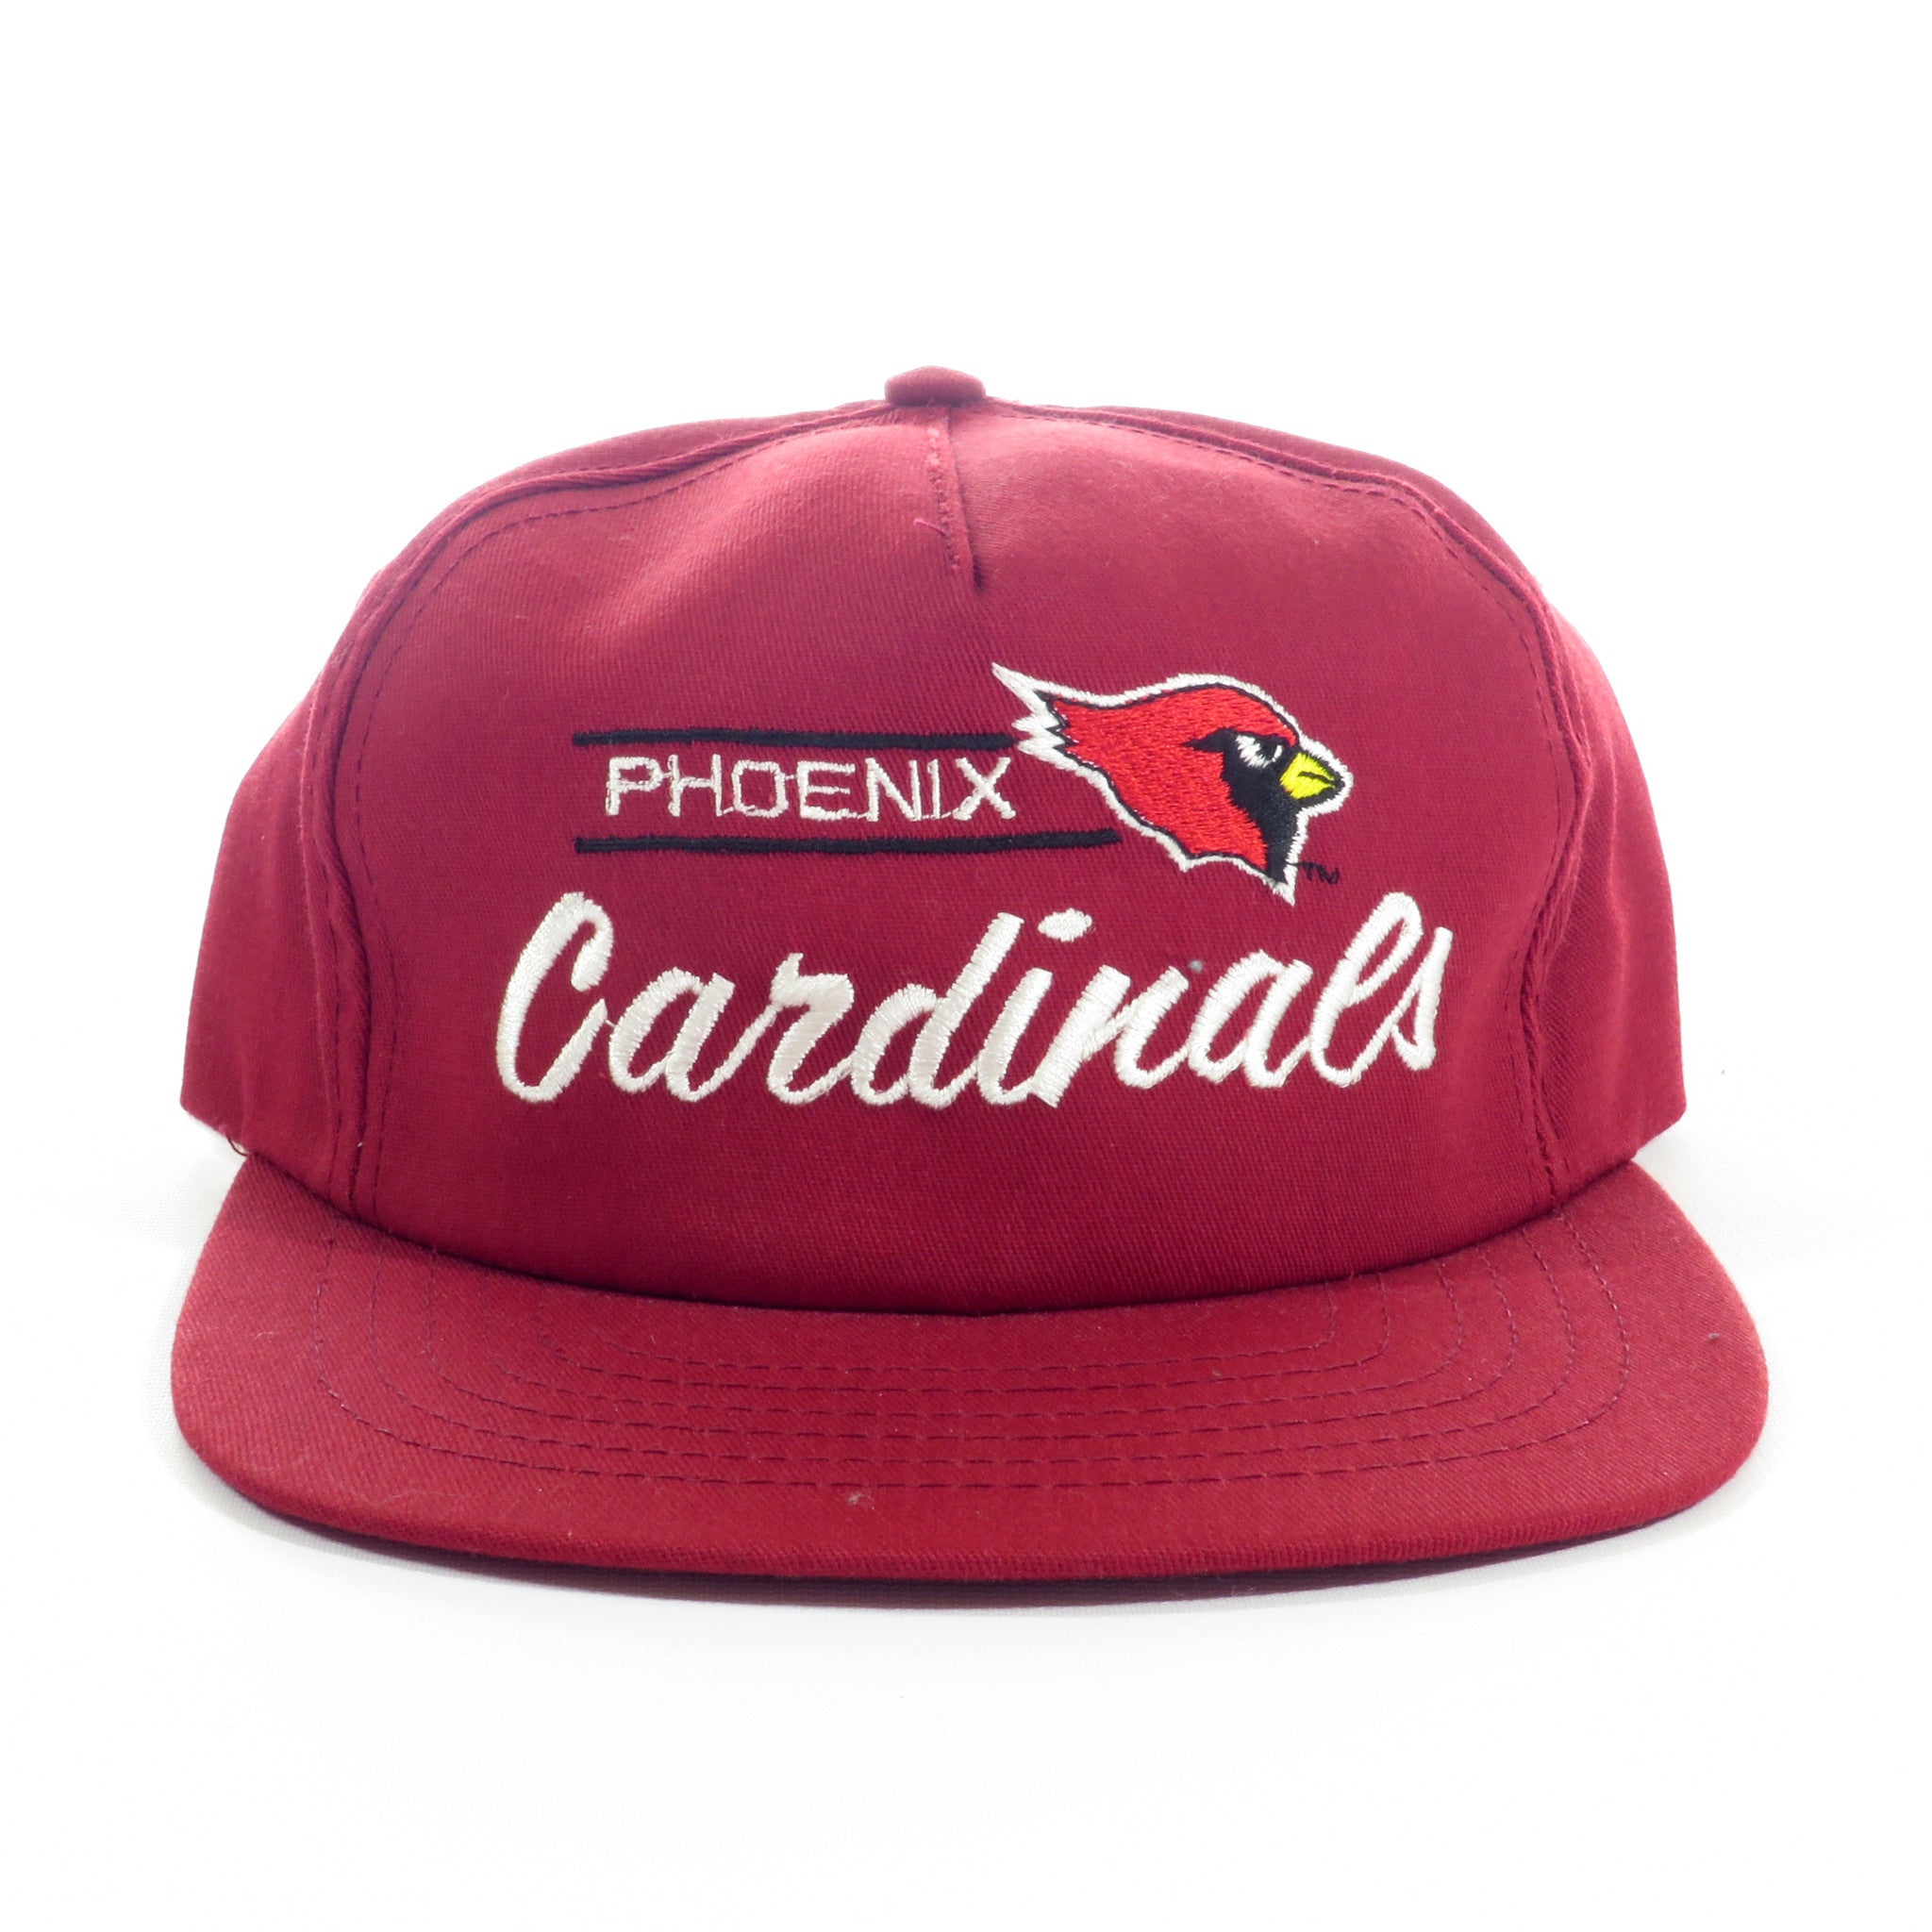 Phoenix Cardinals Snapback Hat